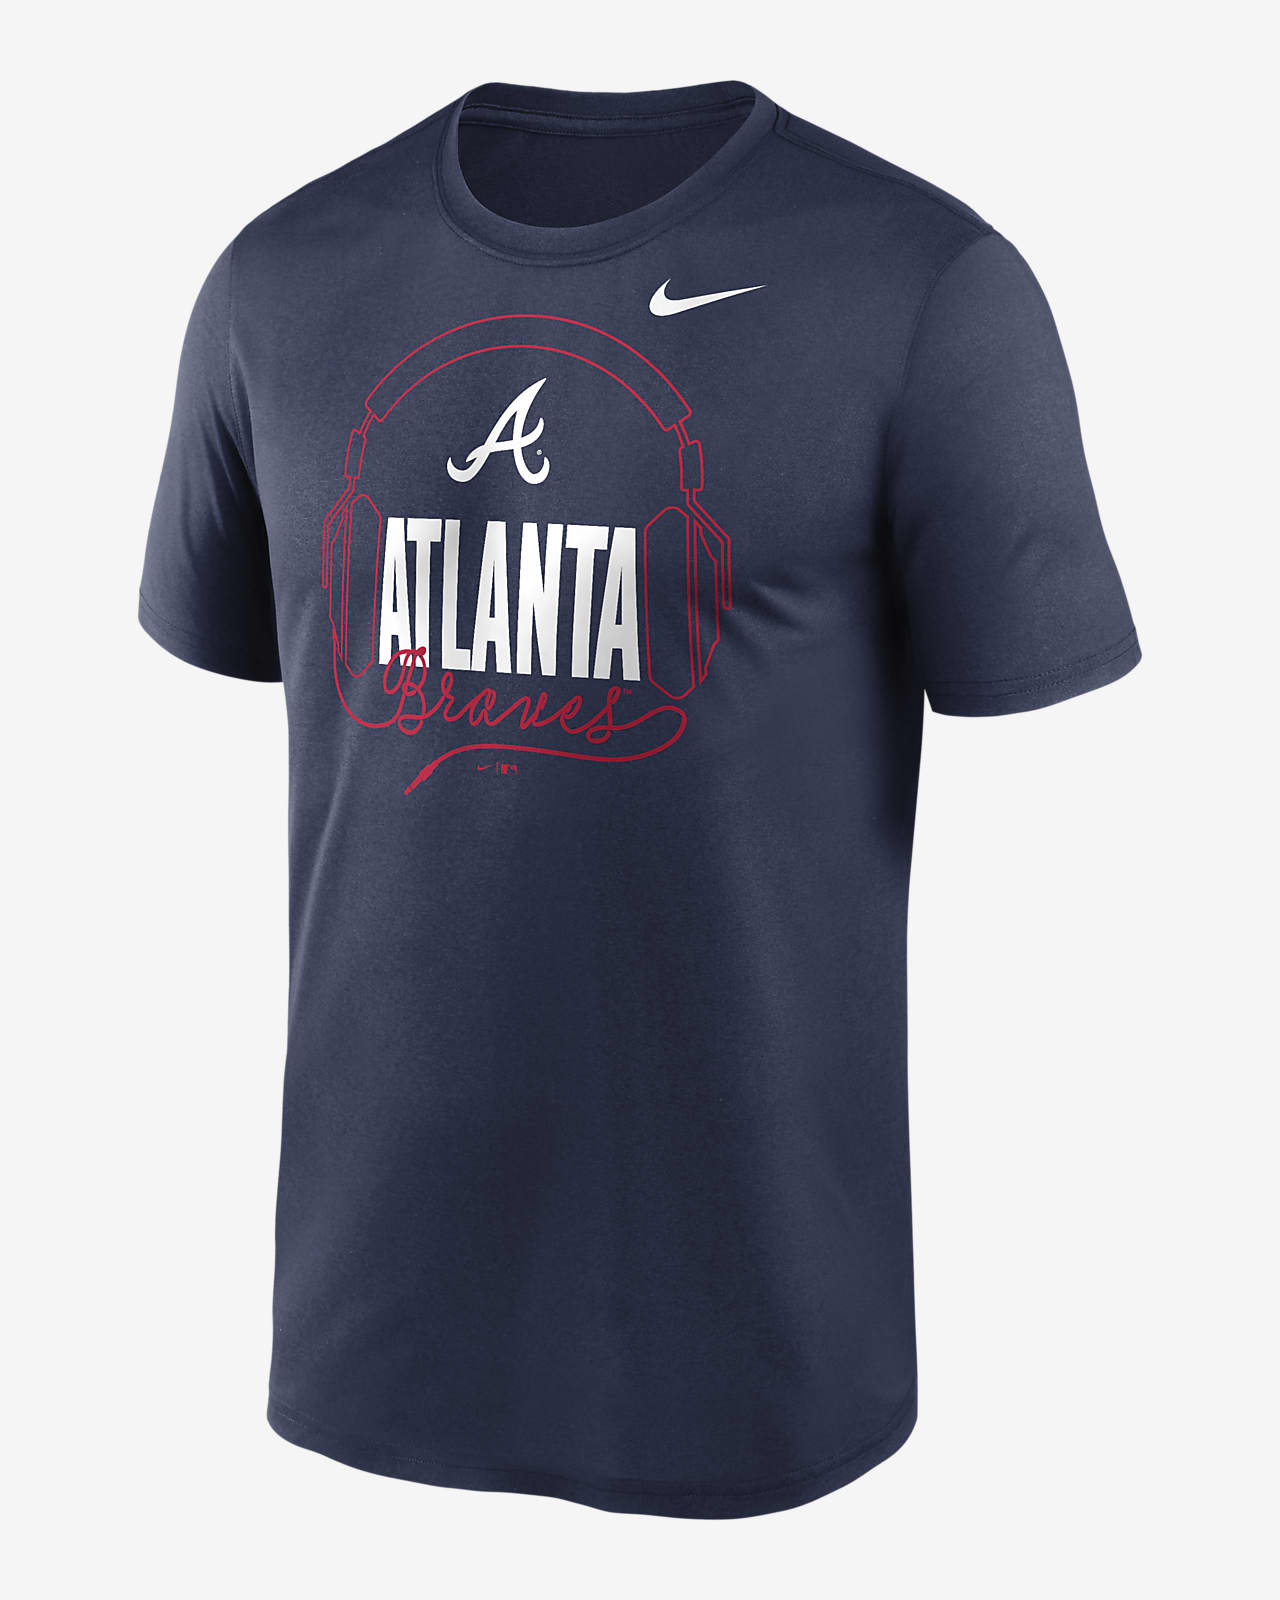 Atlanta Braves Nike Triple Black Jersey - Mens